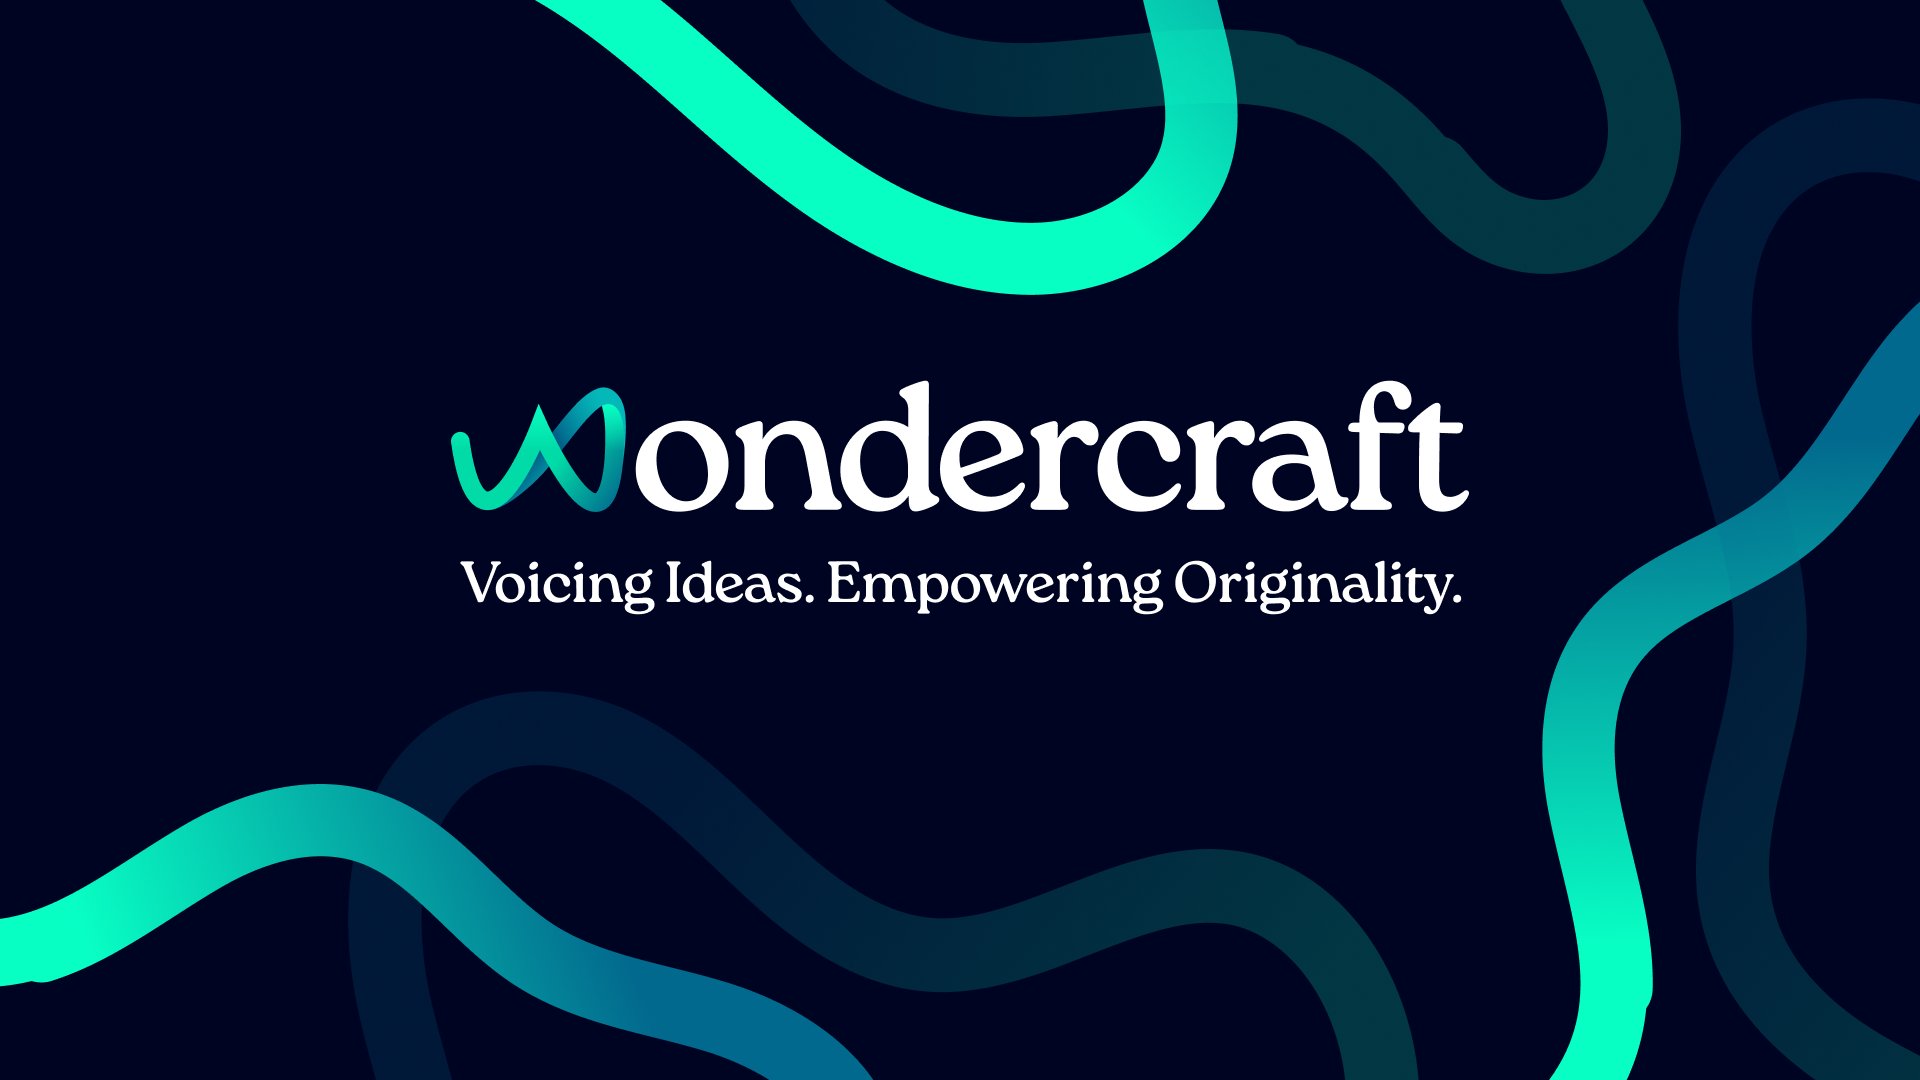 Wondercraft